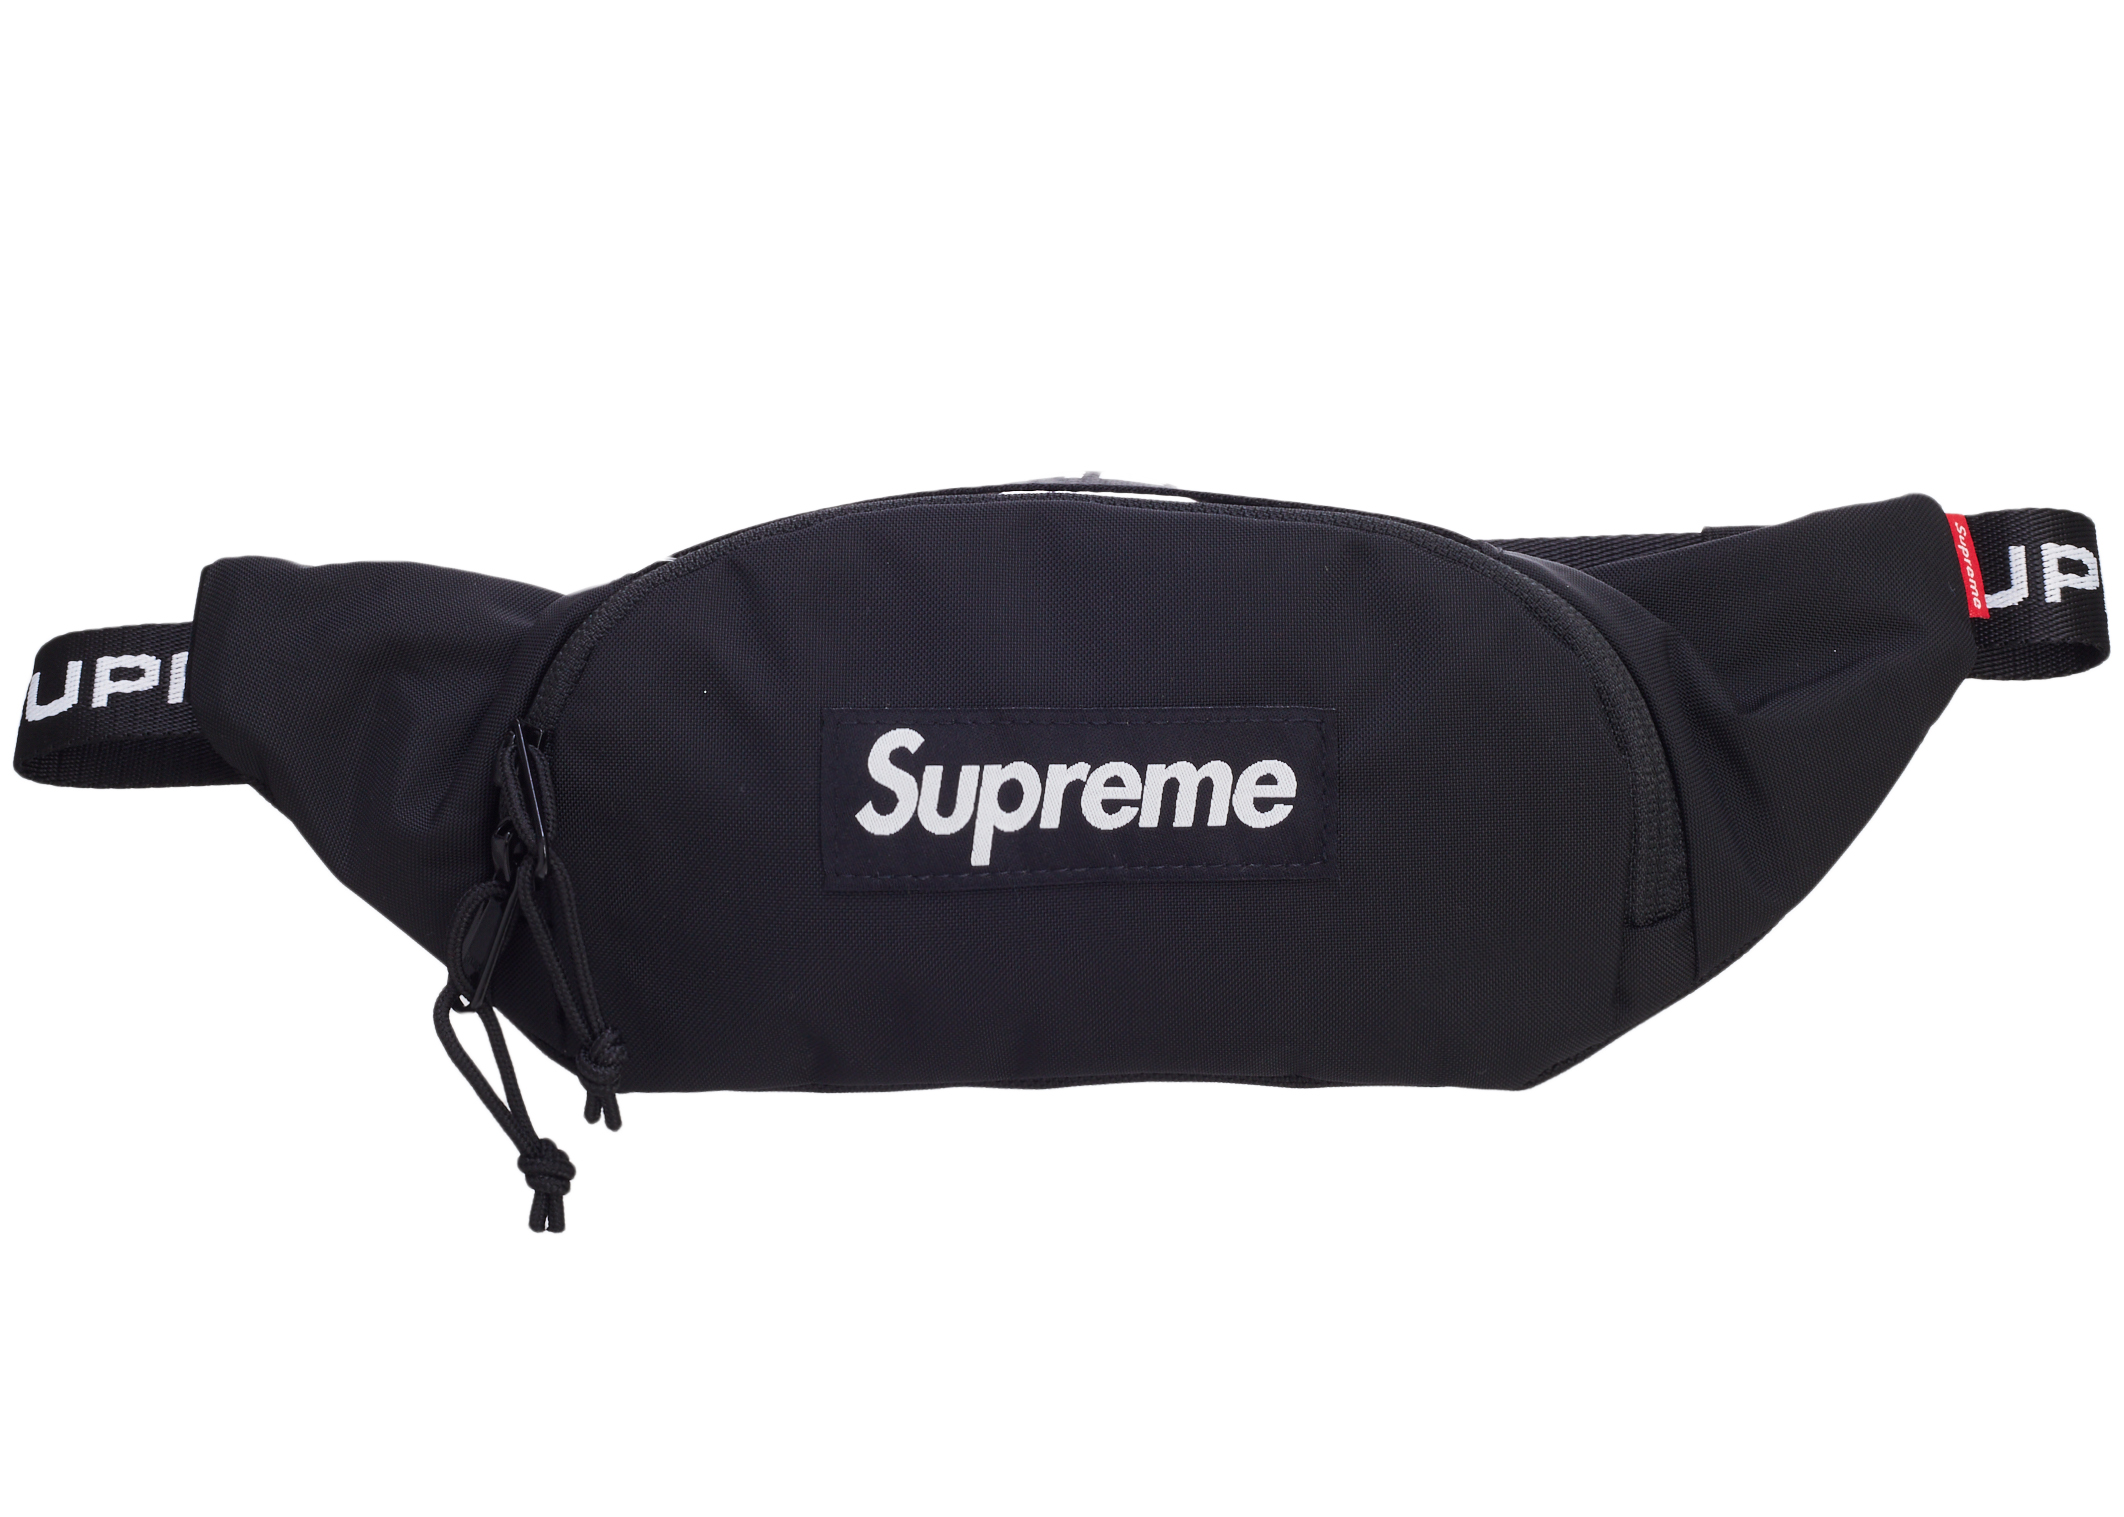 supreme waist bag | www.myglobaltax.com